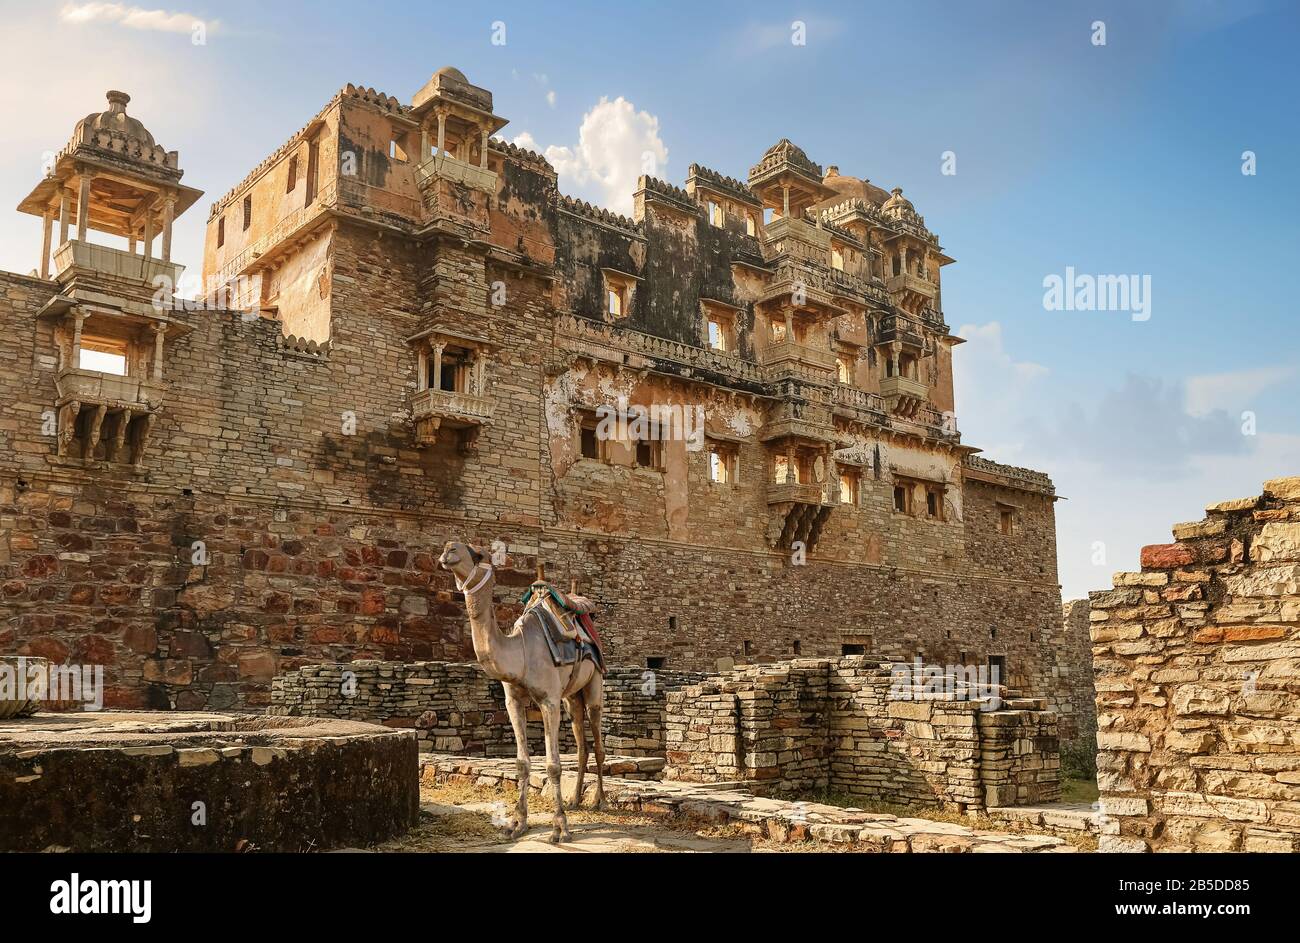 Camel for tourist ride at the ancient ruins of Rana Kumbha Palace at Chittorgarh Fort Rajasthan, India Stock Photo